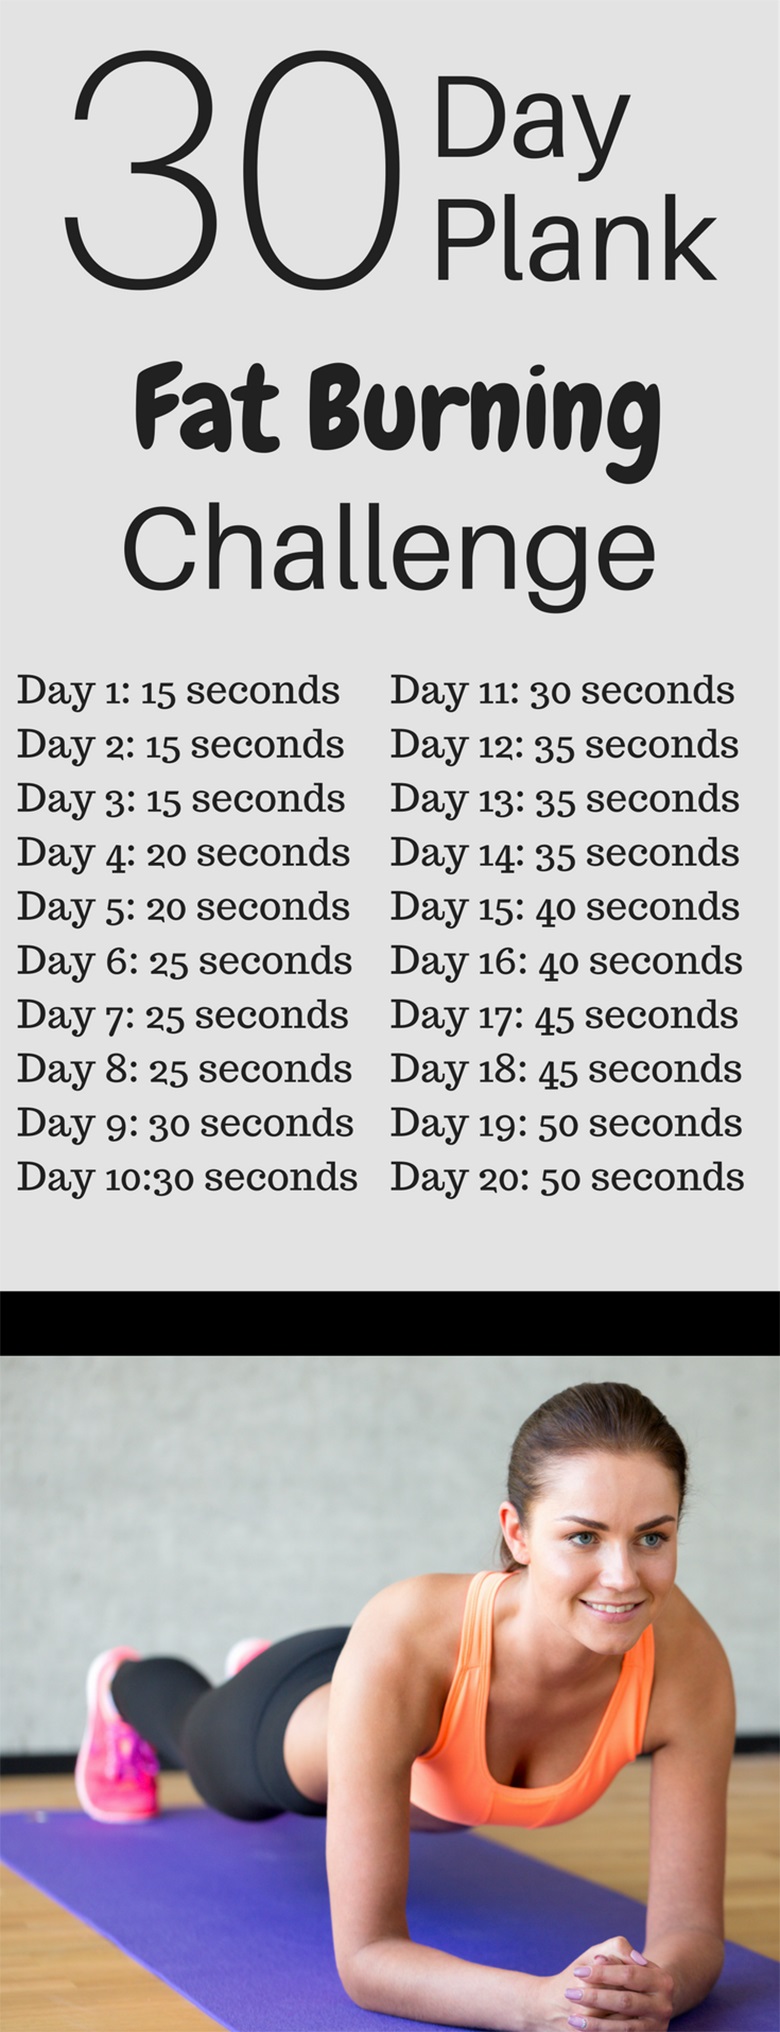 30 day plank challenge calendar printable 61